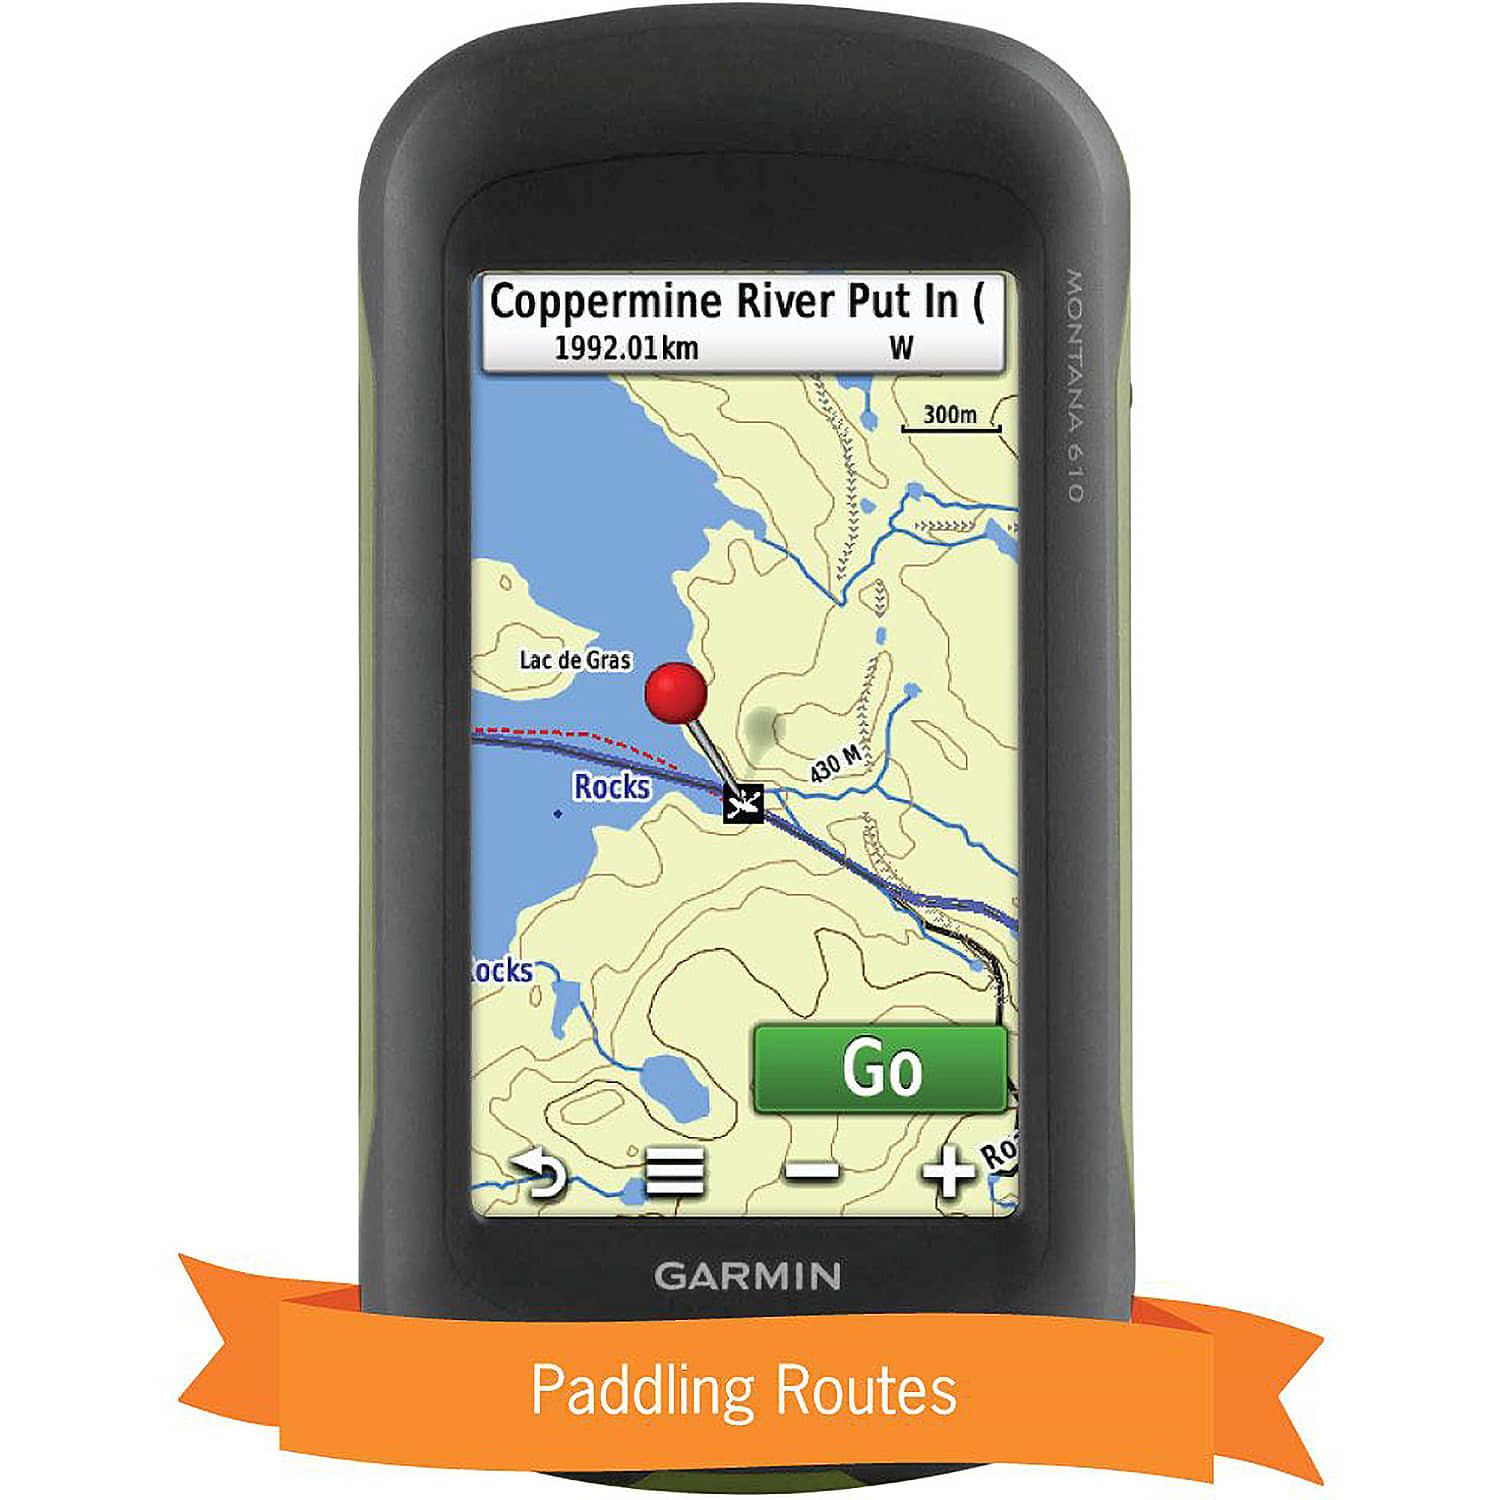 Backroad Mapbooks  Northern Canada - Backroad GPS Maps